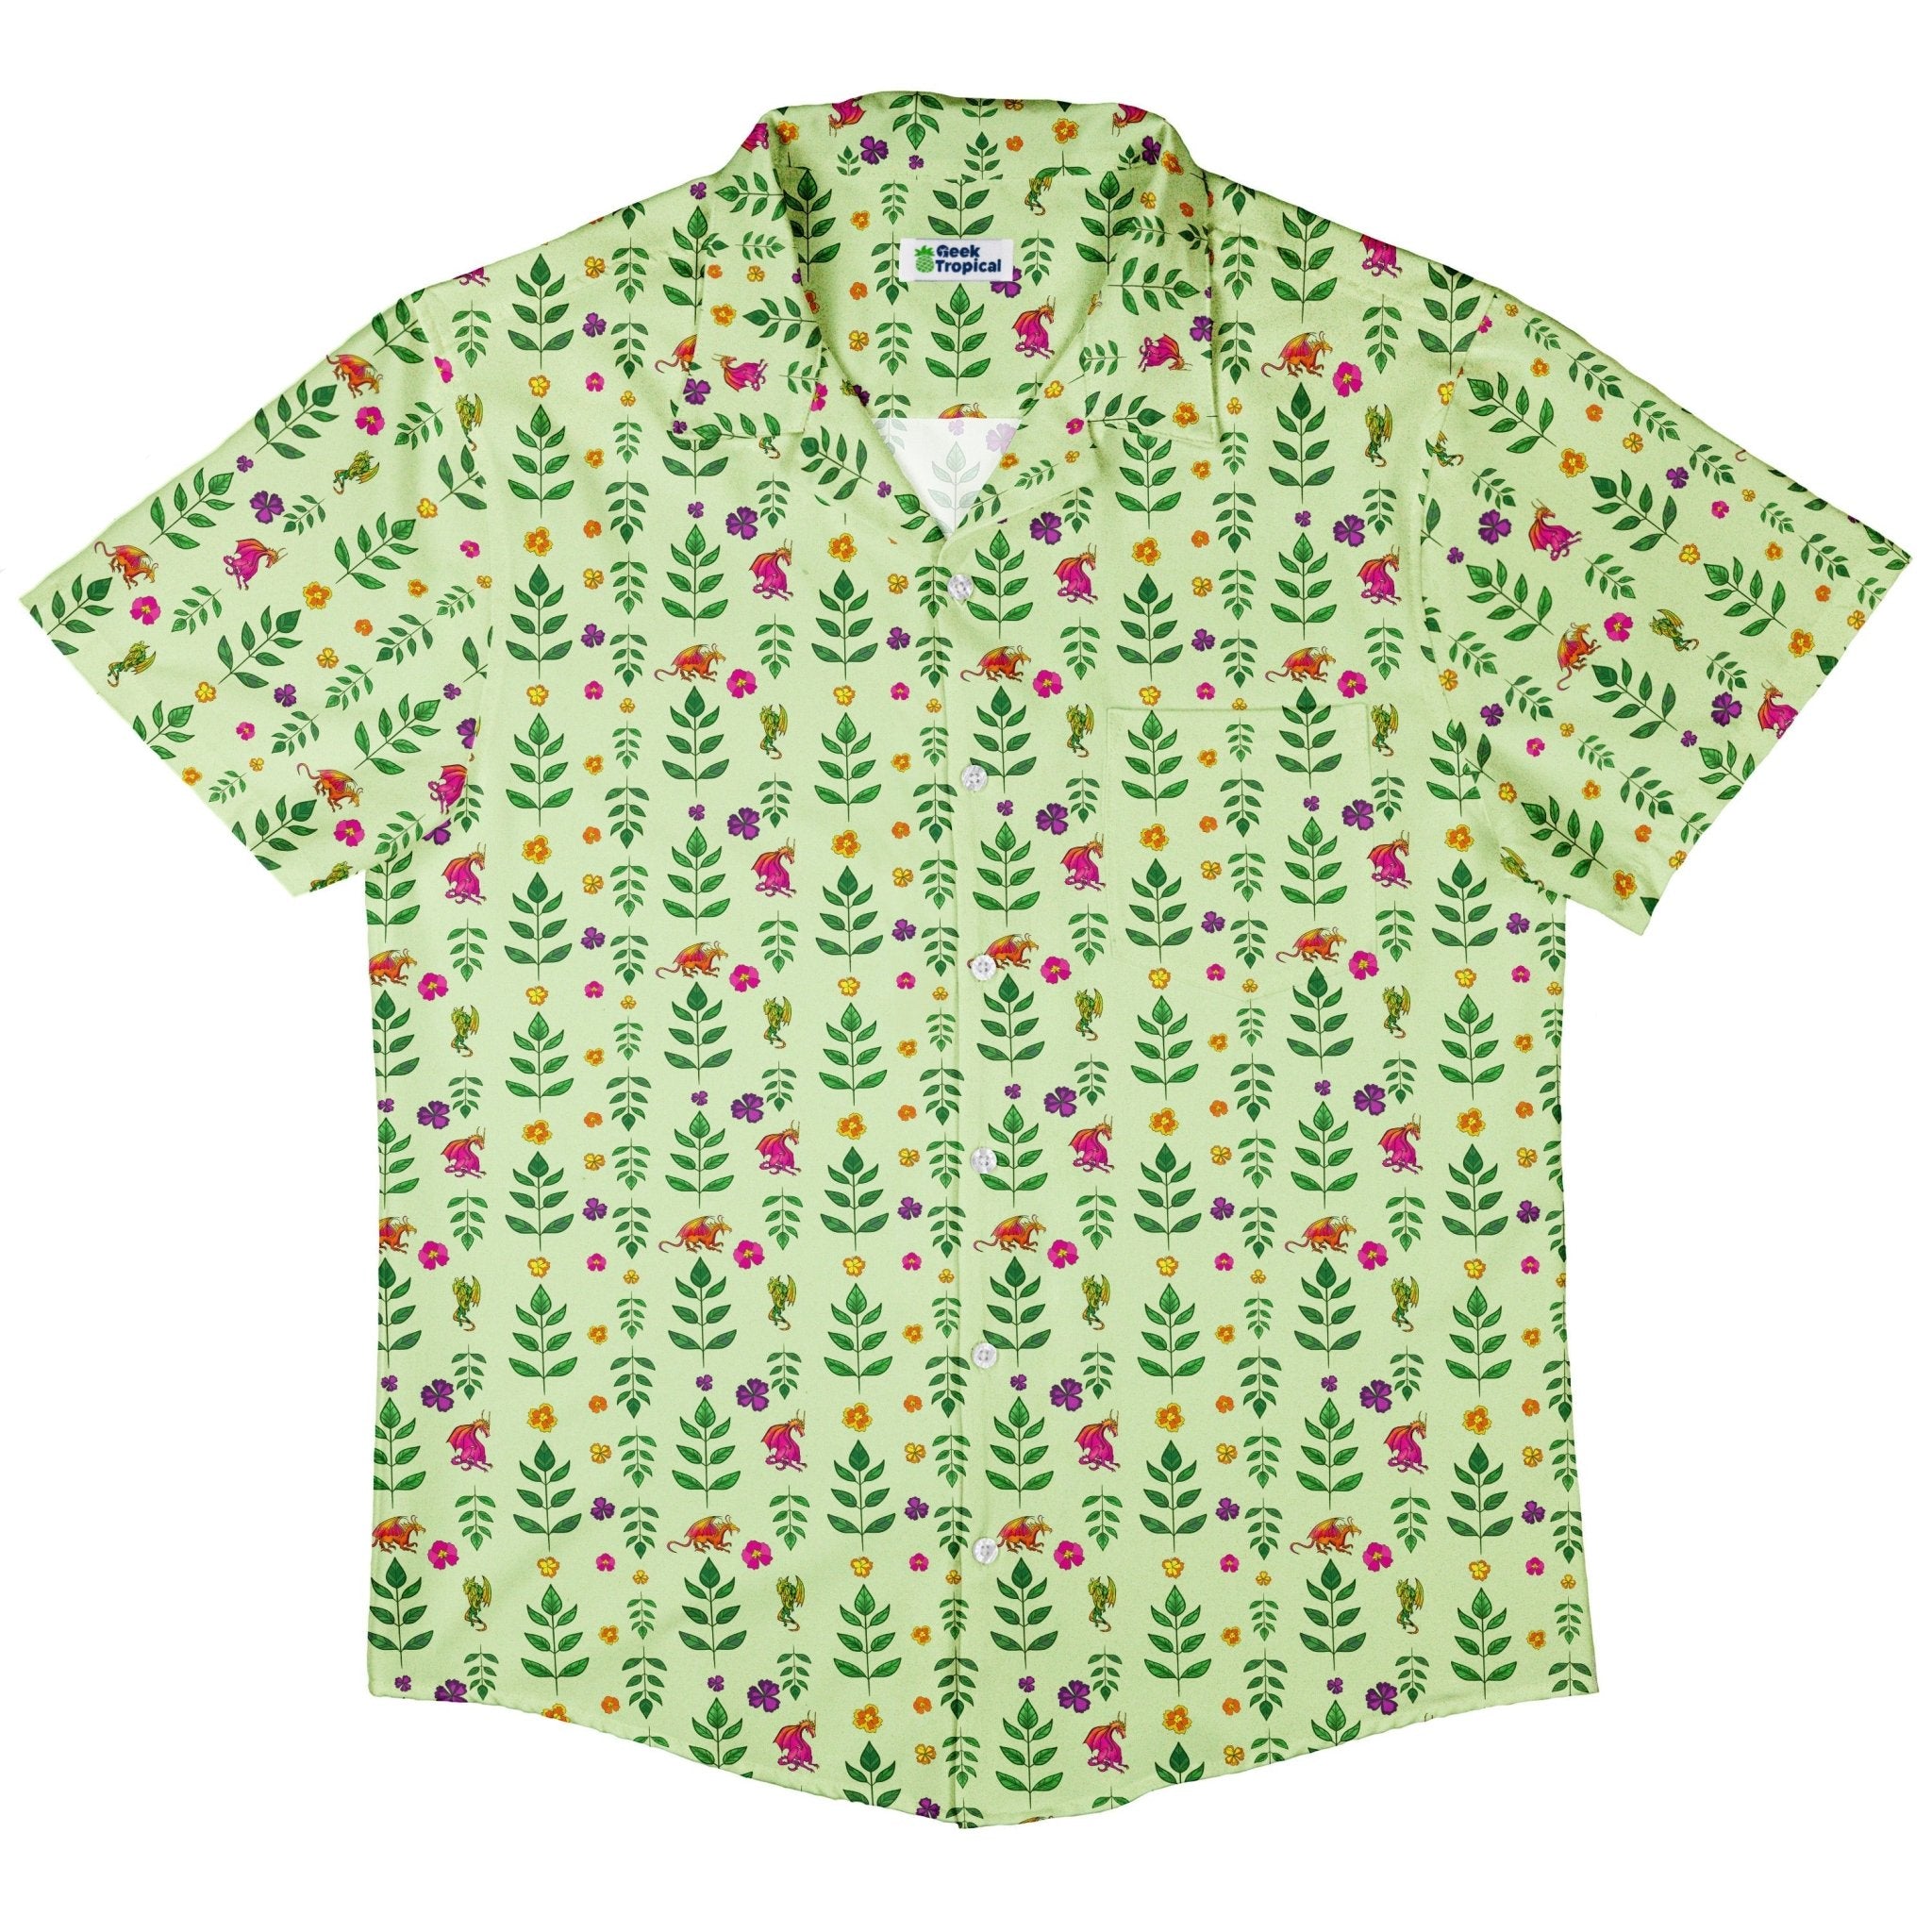 Garden Dragons Fantasy Button Up Shirt - adult sizing - Designed by Rose Khan - Fantasy Prints